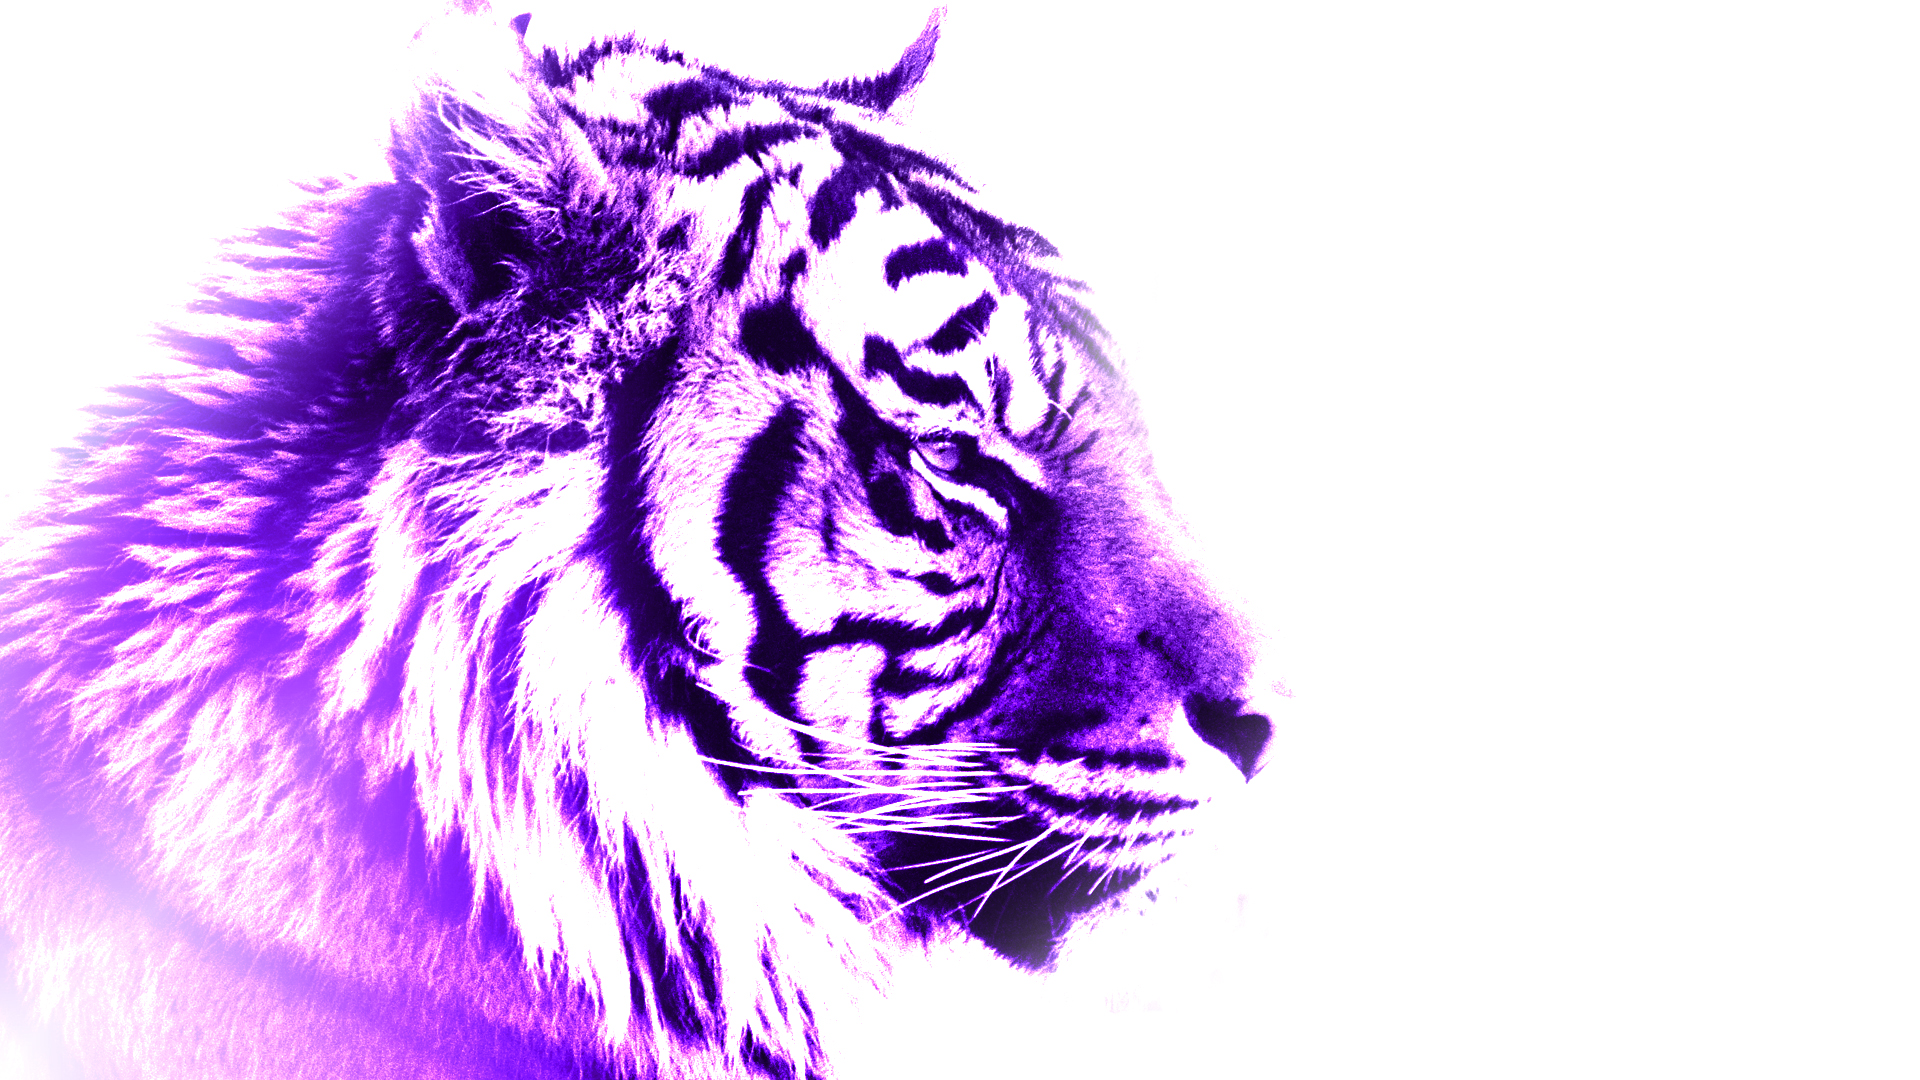 purple_tiger_by_flamingshrapnel-d5jxlec.